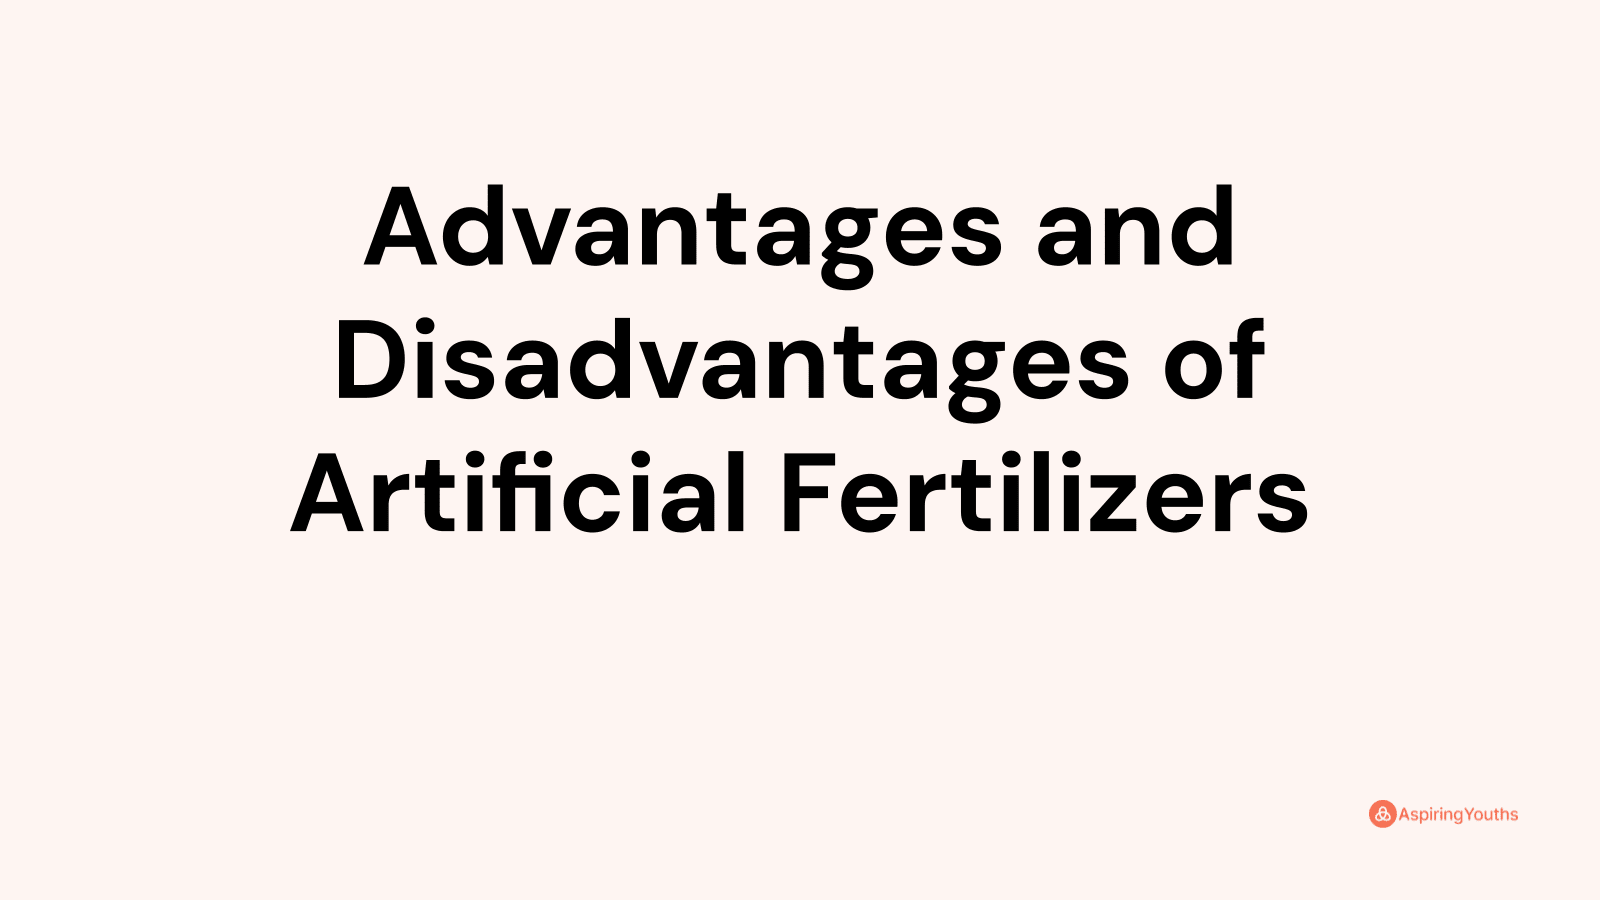 Advantages and disadvantages of Artificial Fertilizers